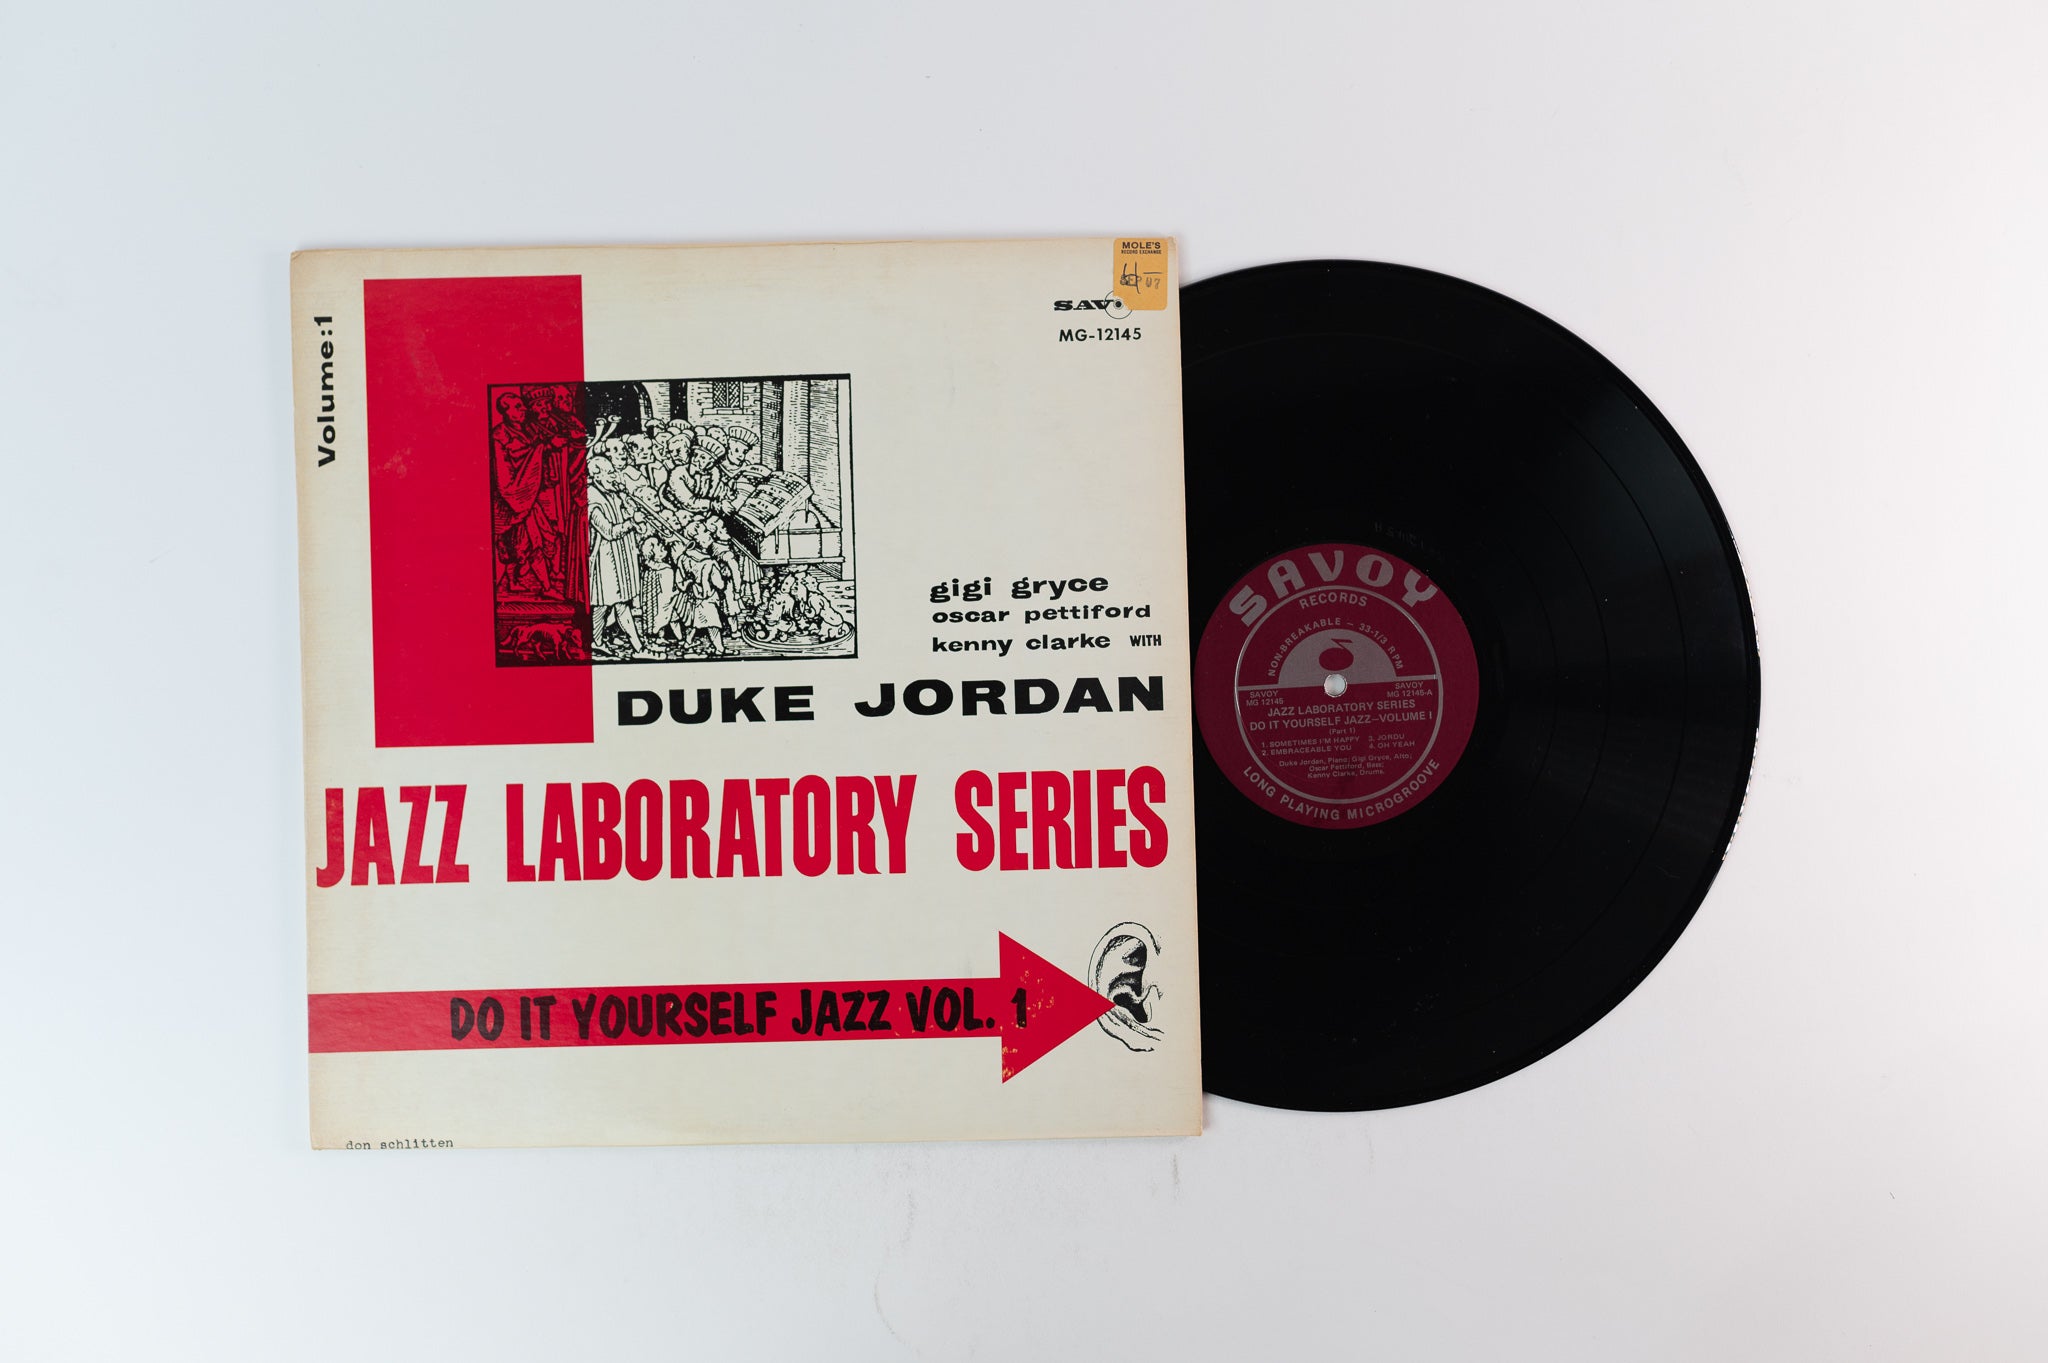 Duke Jordan - Do It Yourself Jazz Vol. 1 on Savoy Reissue